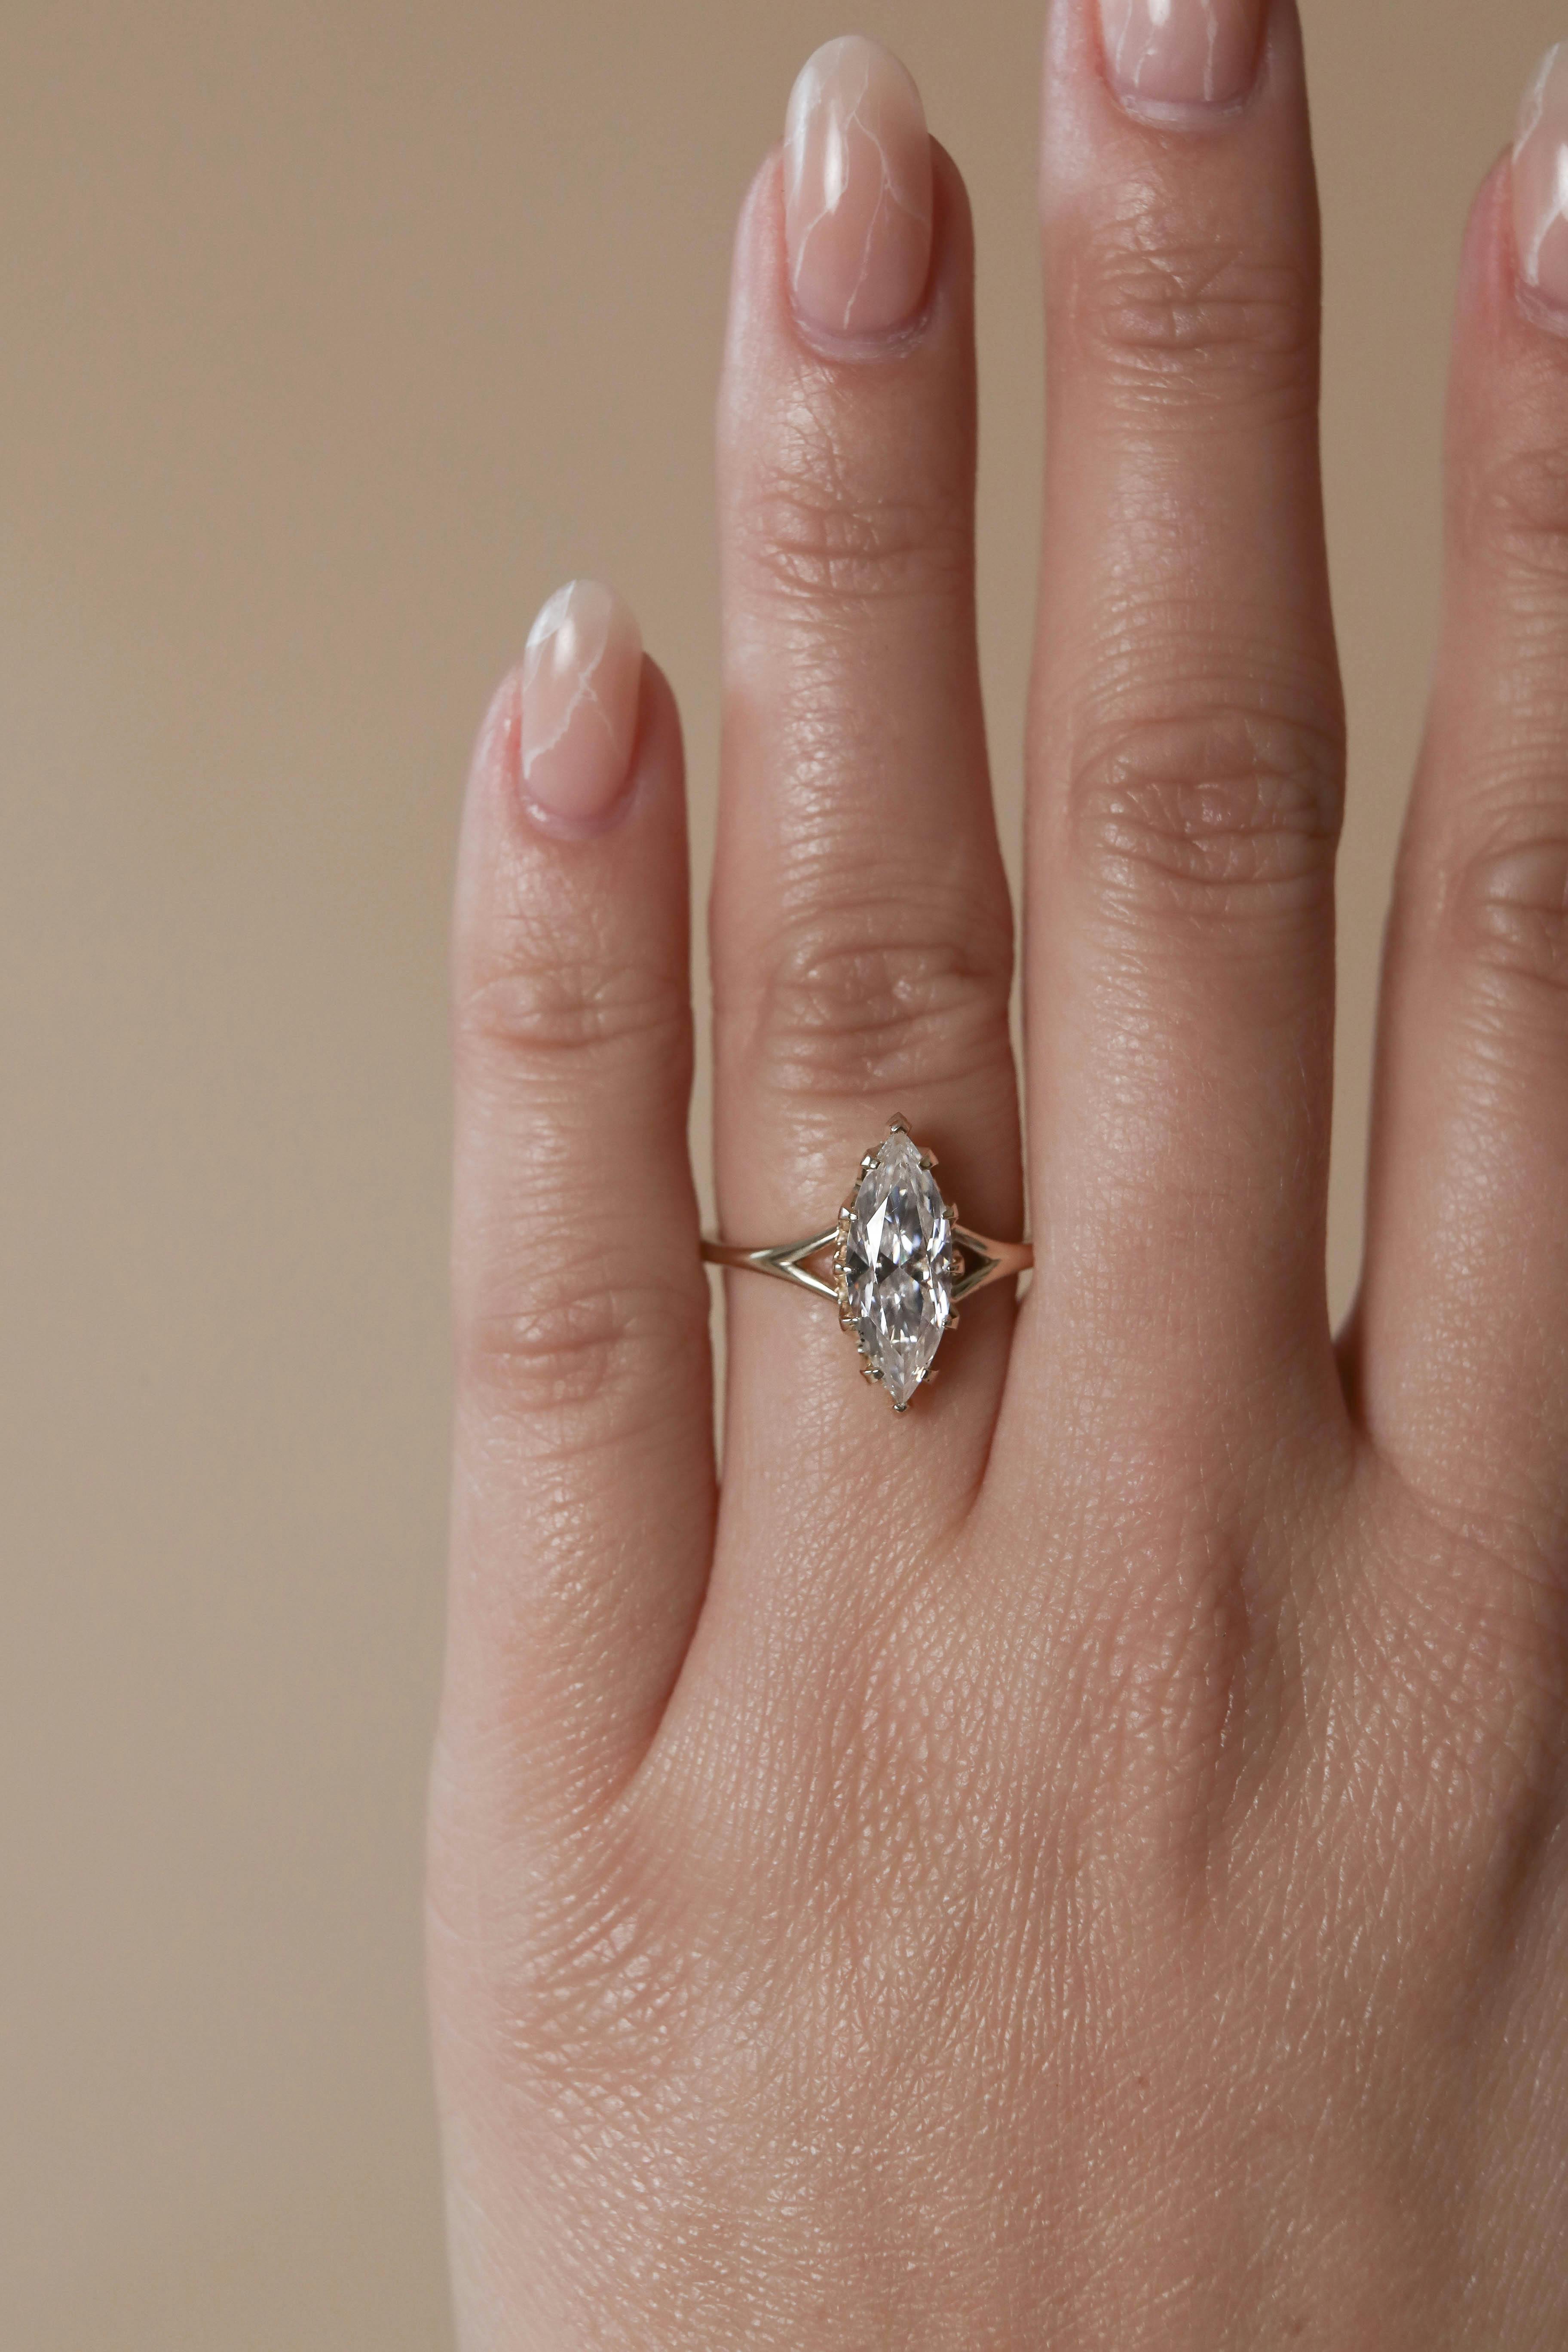 A custom designed engagement ring.